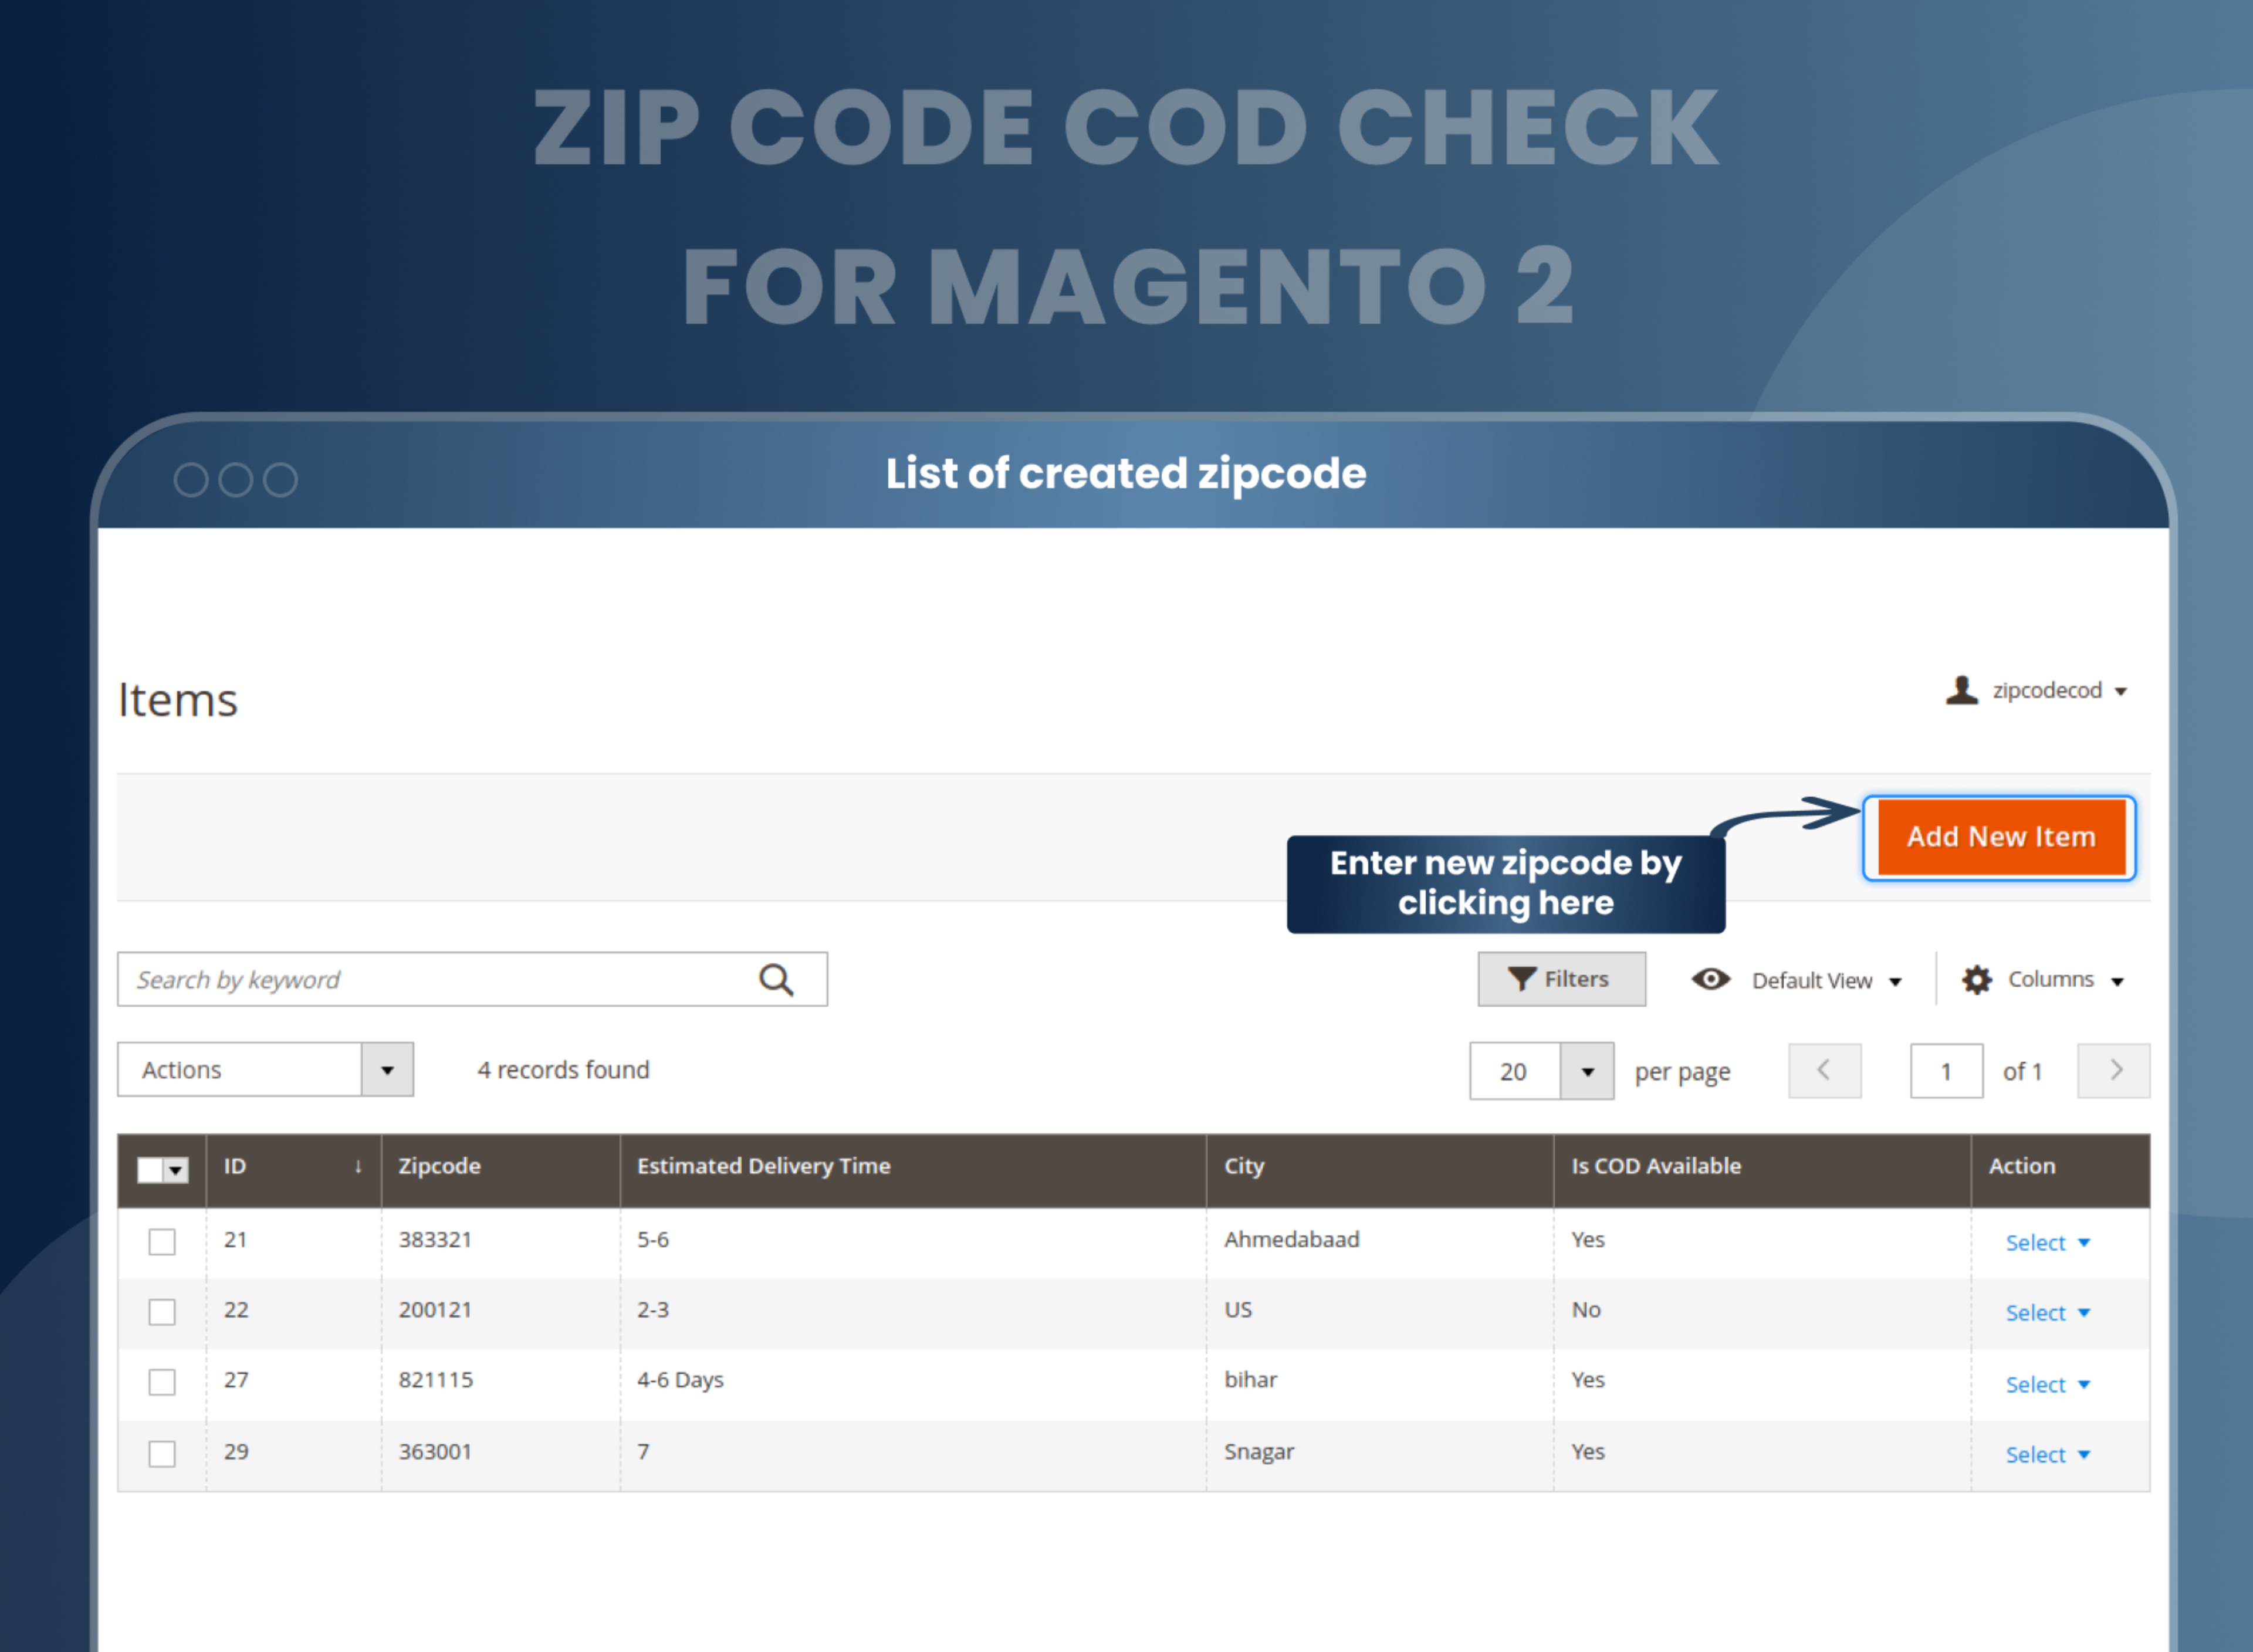 List of created zipcode